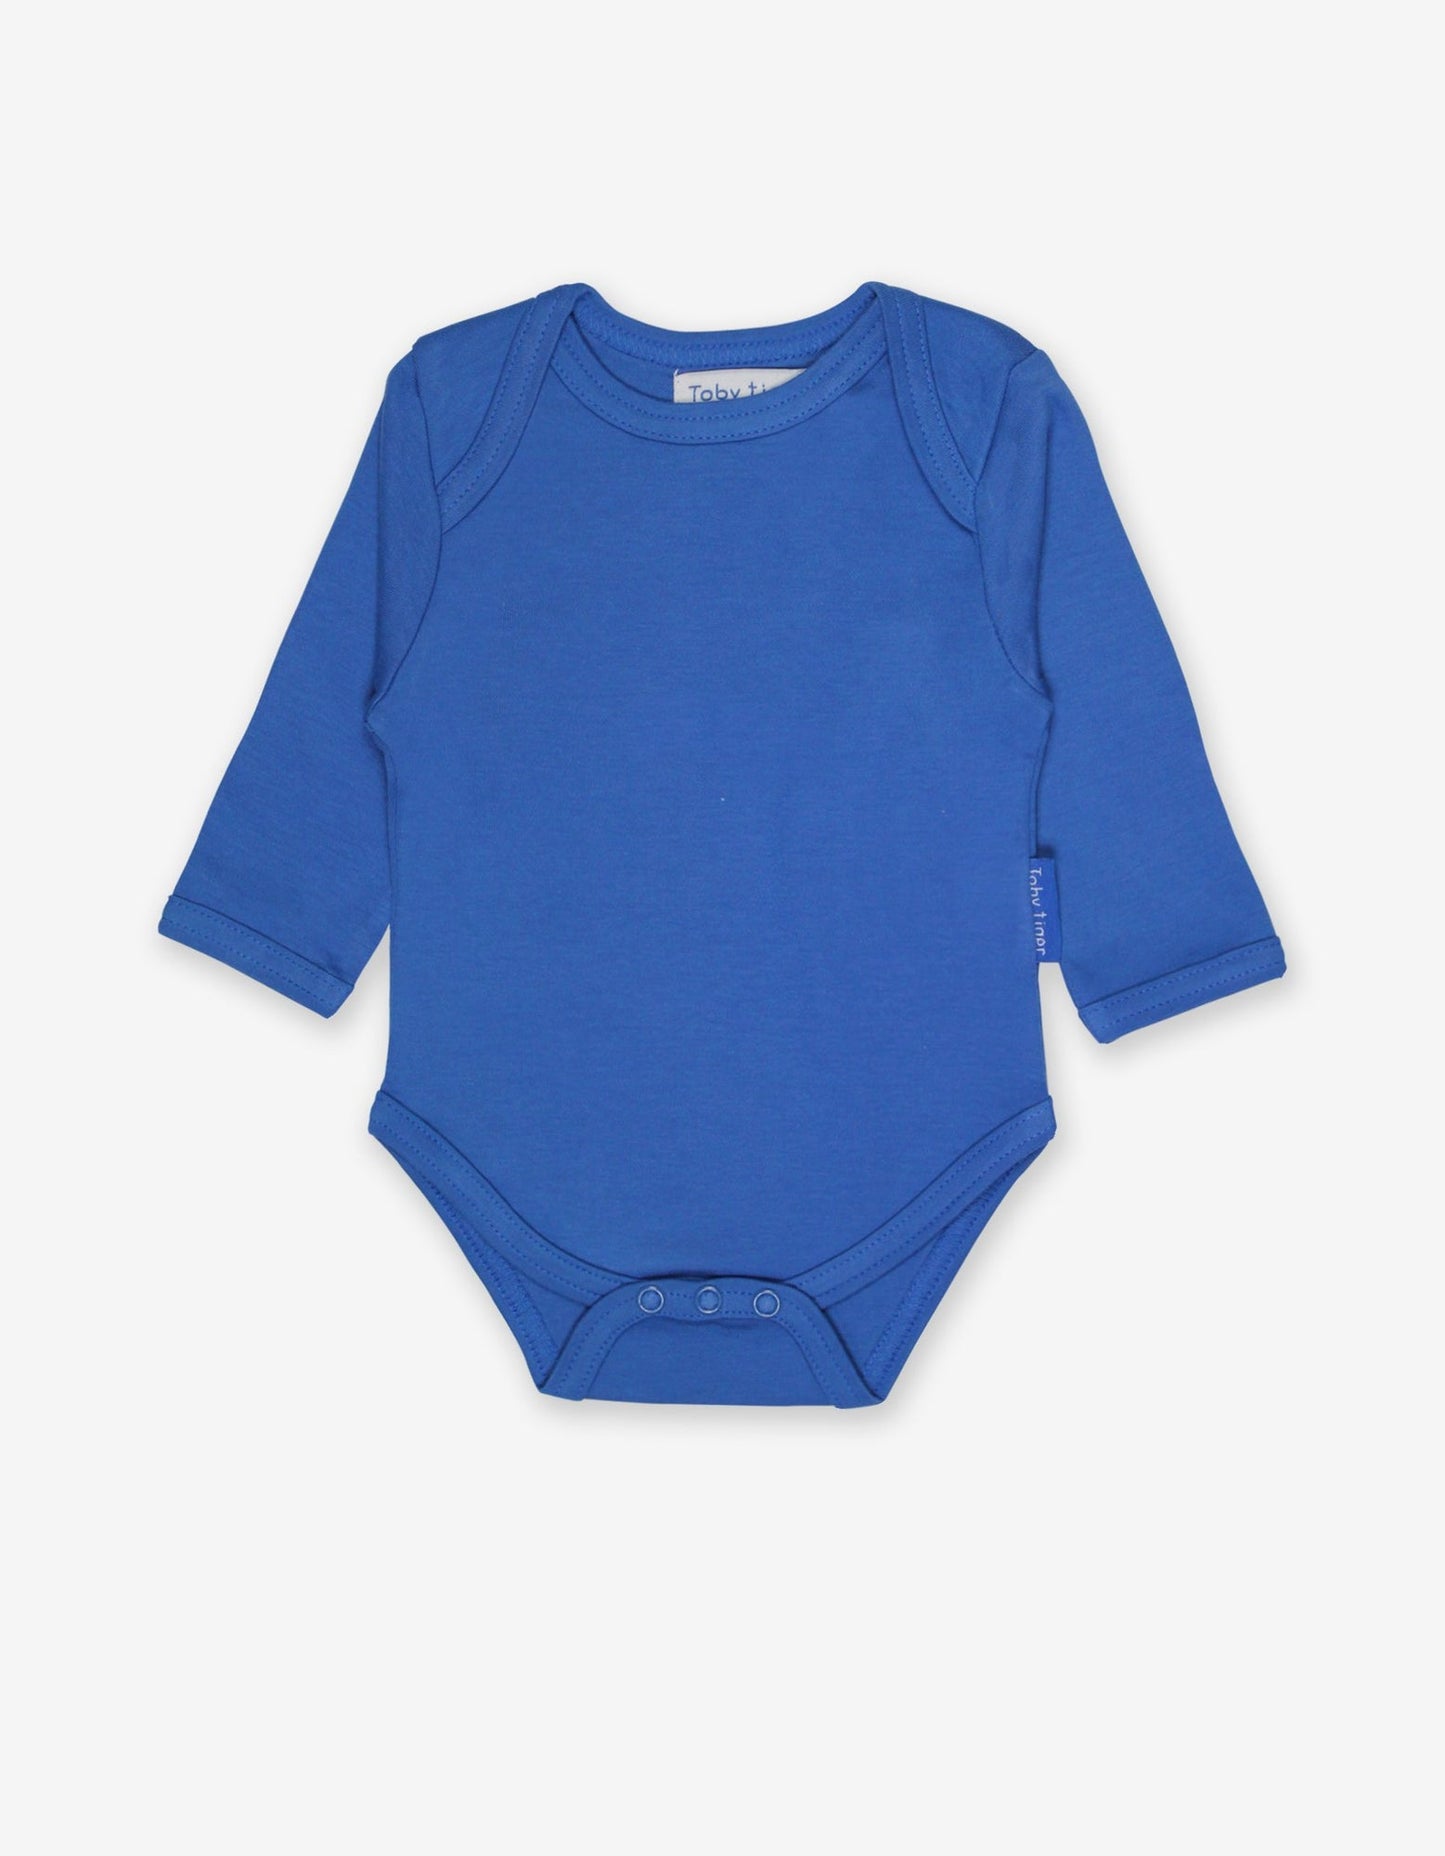 Blue Long Sleeve Baby Body